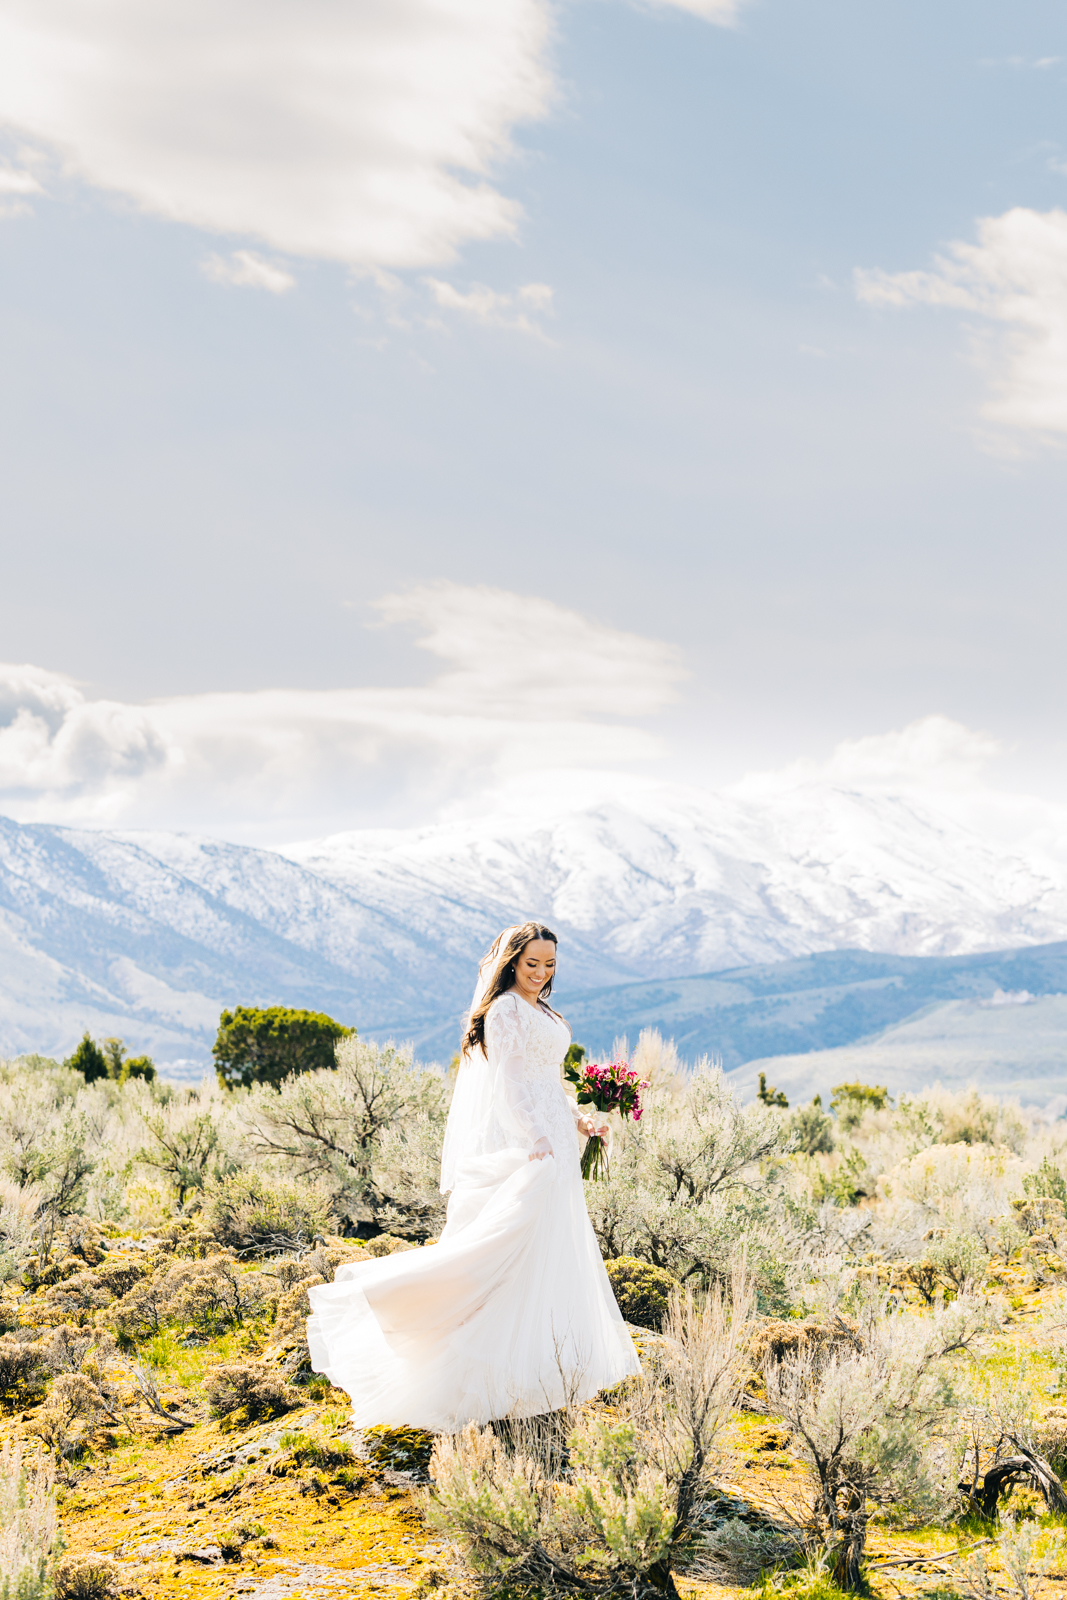 Jackson Hole wedding photographer captures bride moving dress around in wind